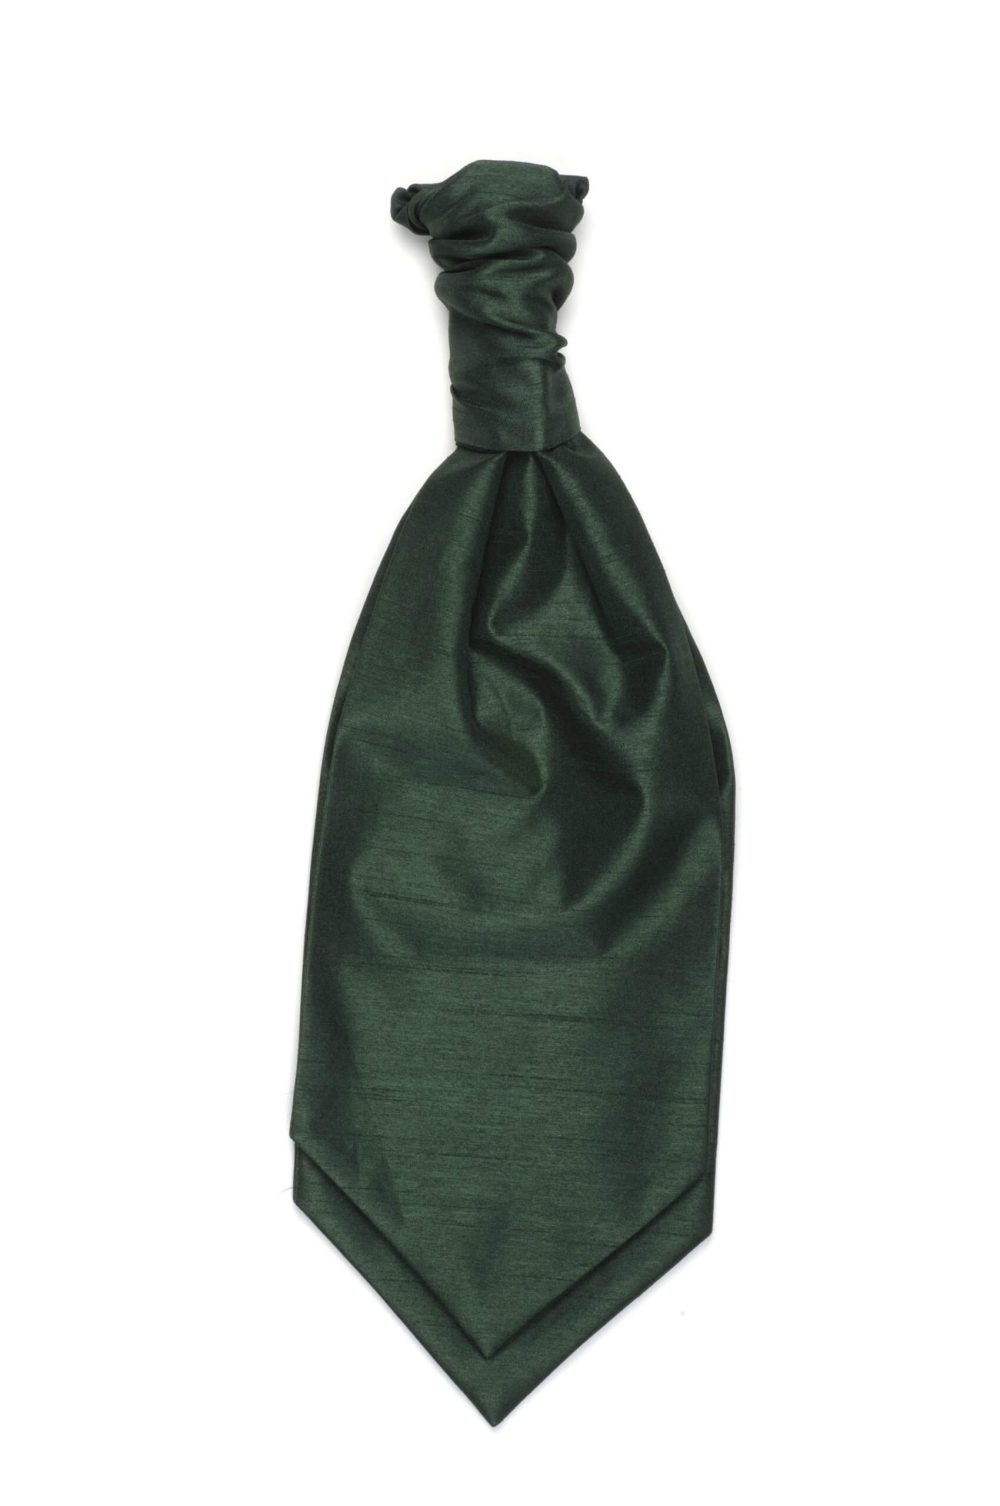 Bottle Green Cravat